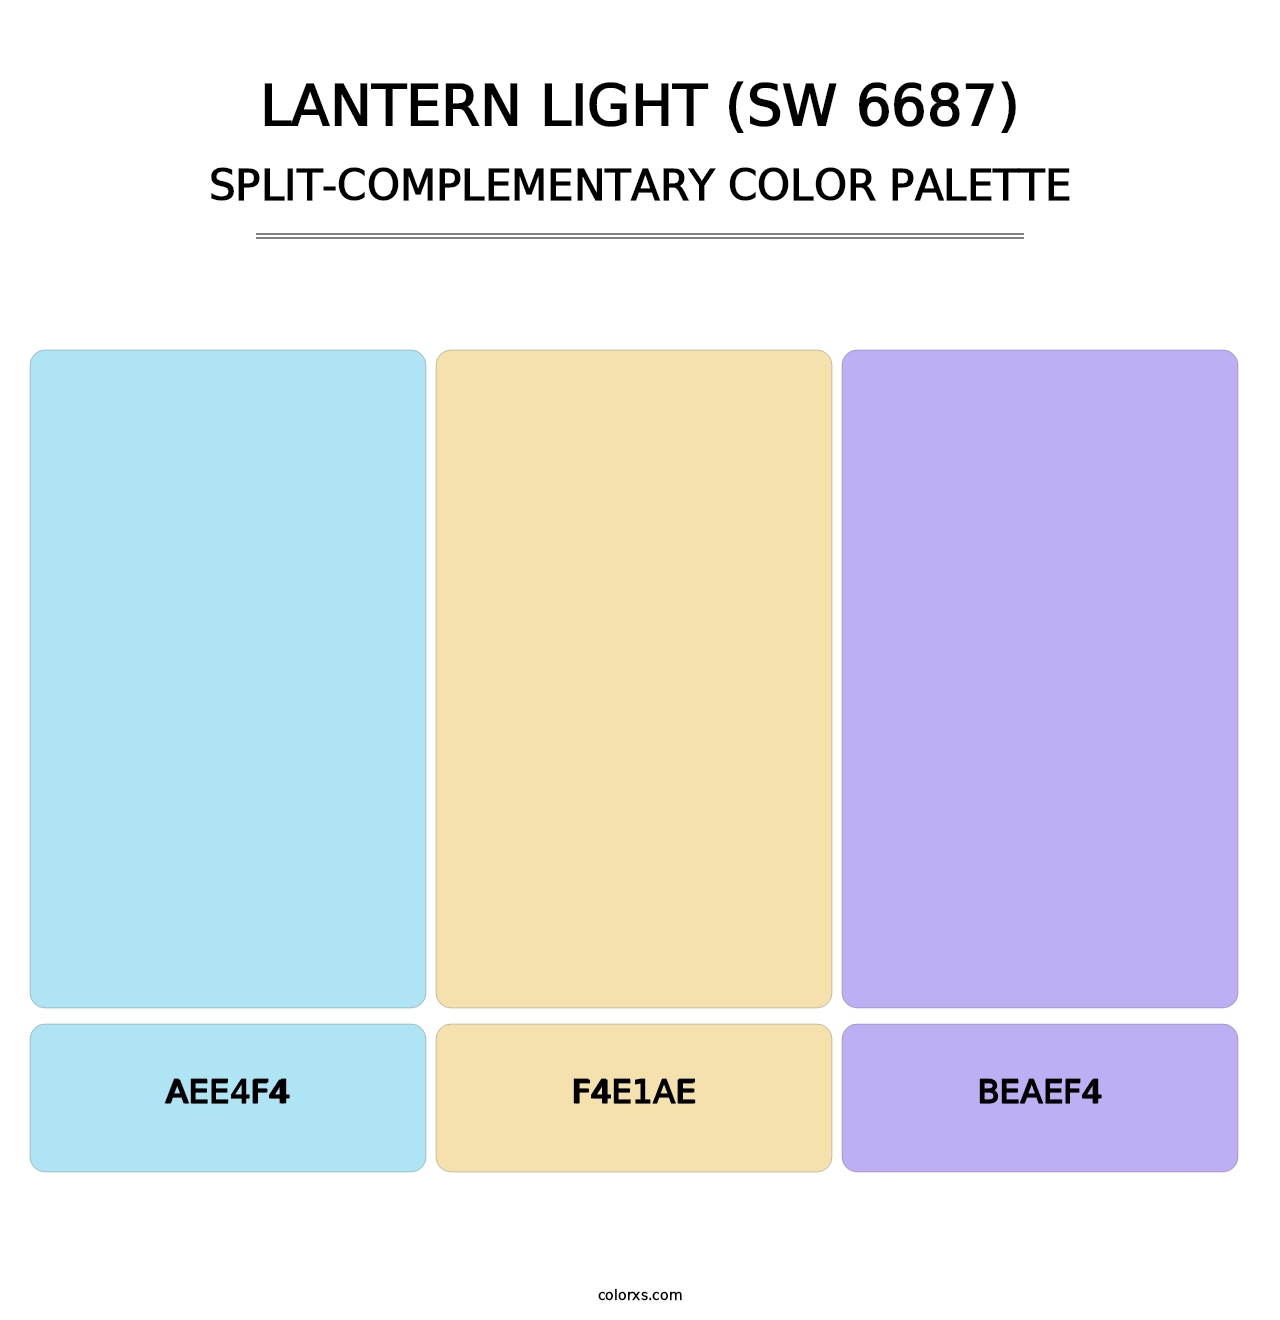 Lantern Light (SW 6687) - Split-Complementary Color Palette